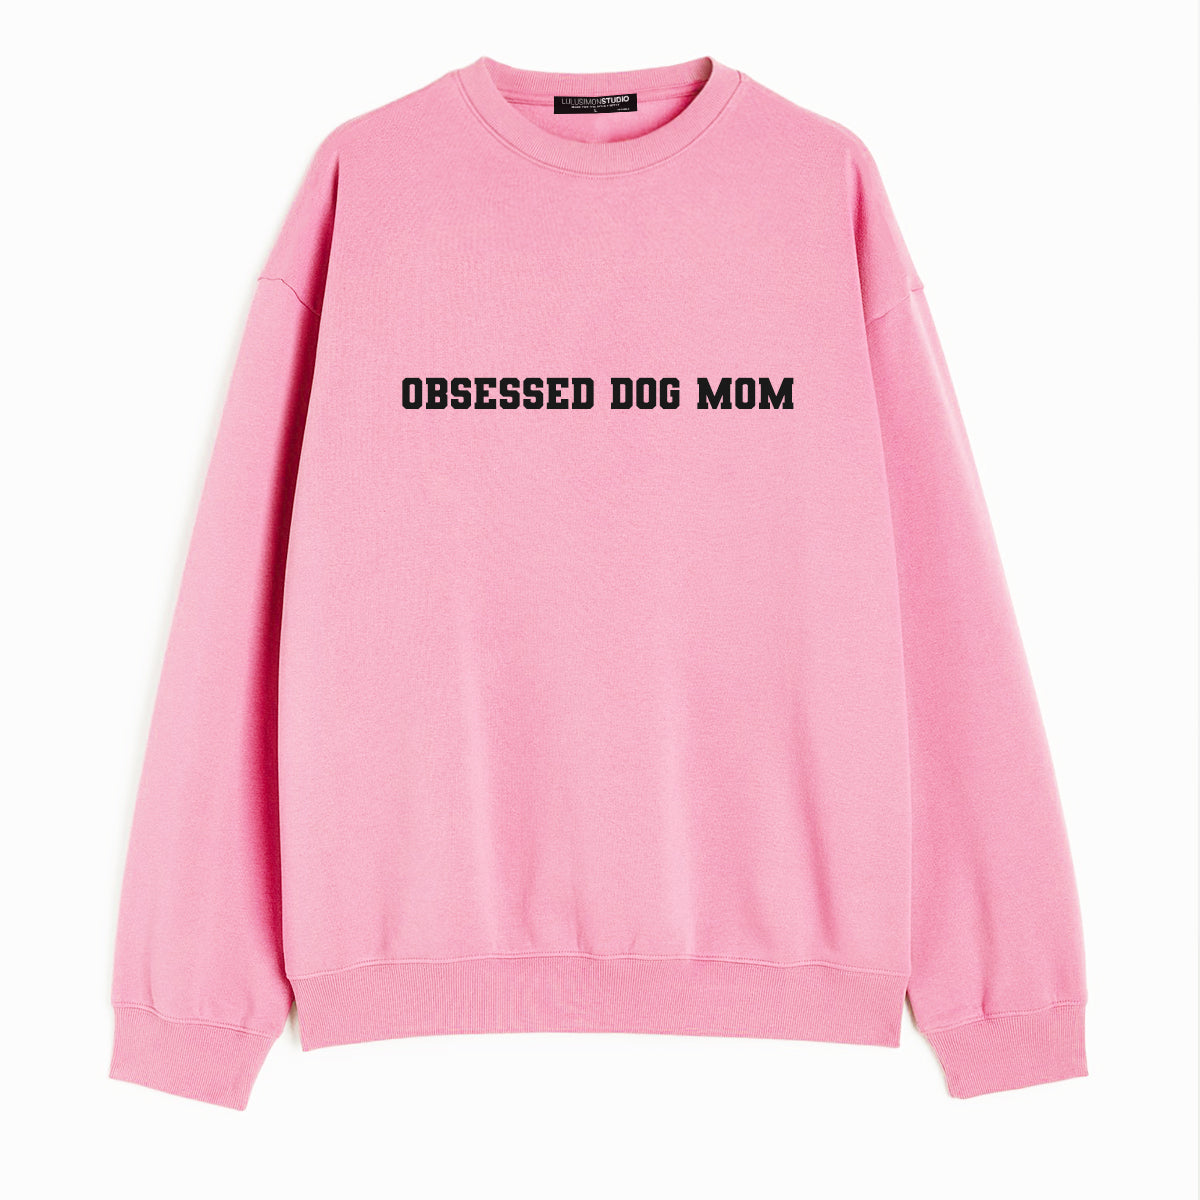 Obsessed Dog Mom Sweatshirt